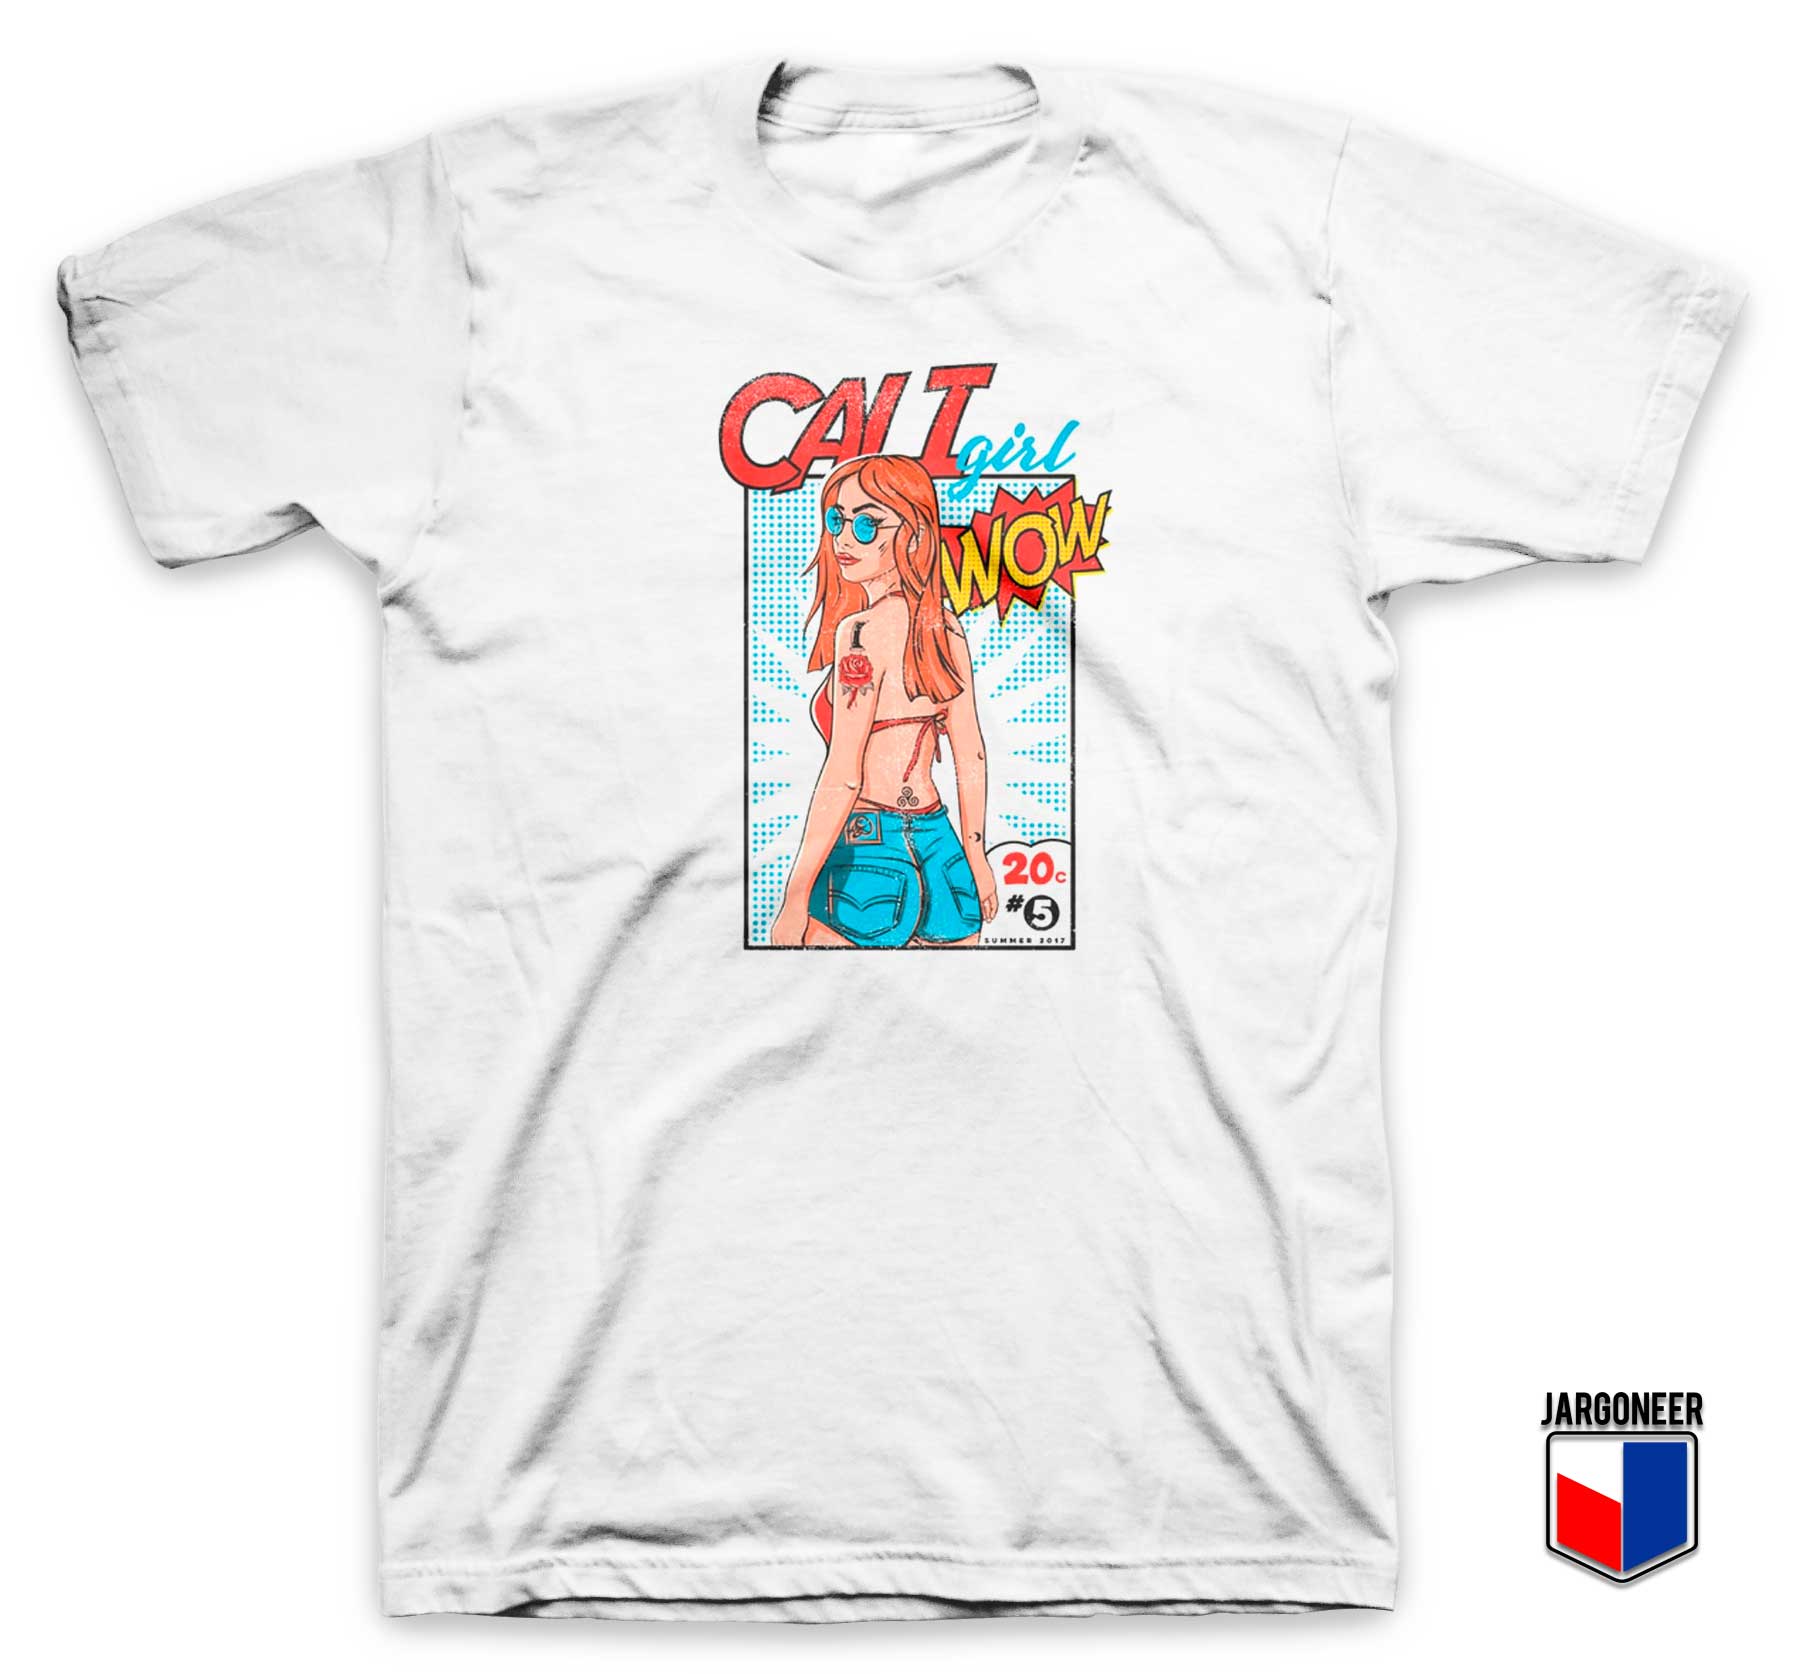 Cali Girl Poster T Shirt - Shop Unique Graphic Cool Shirt Designs